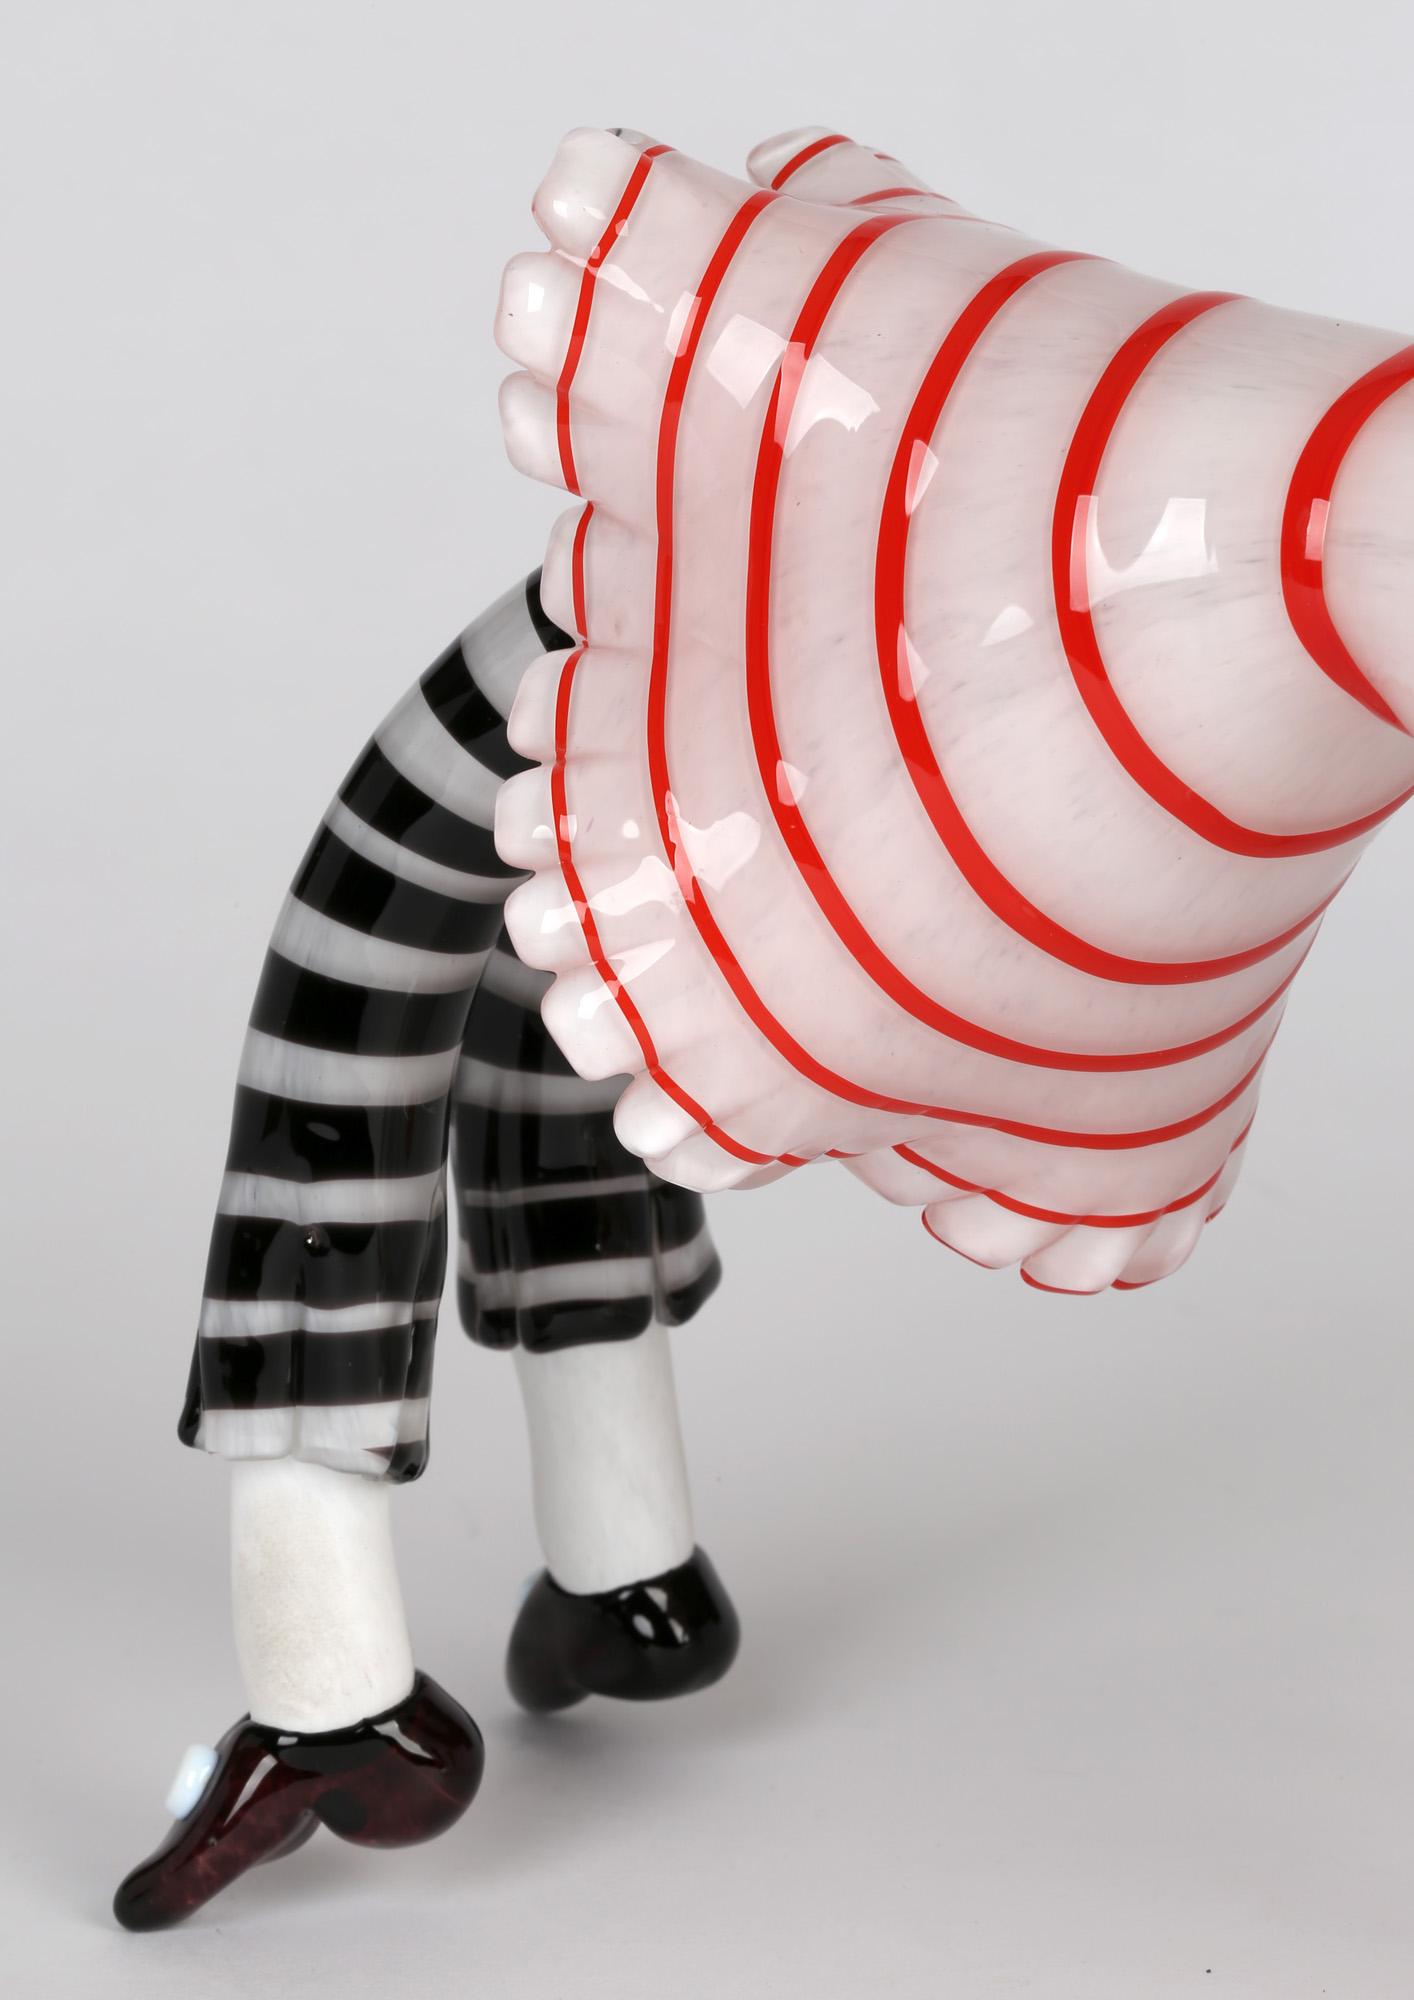 Franco Toffolo Commedia Dell'Arte Glass Clown Acrobat Figure For Sale 4